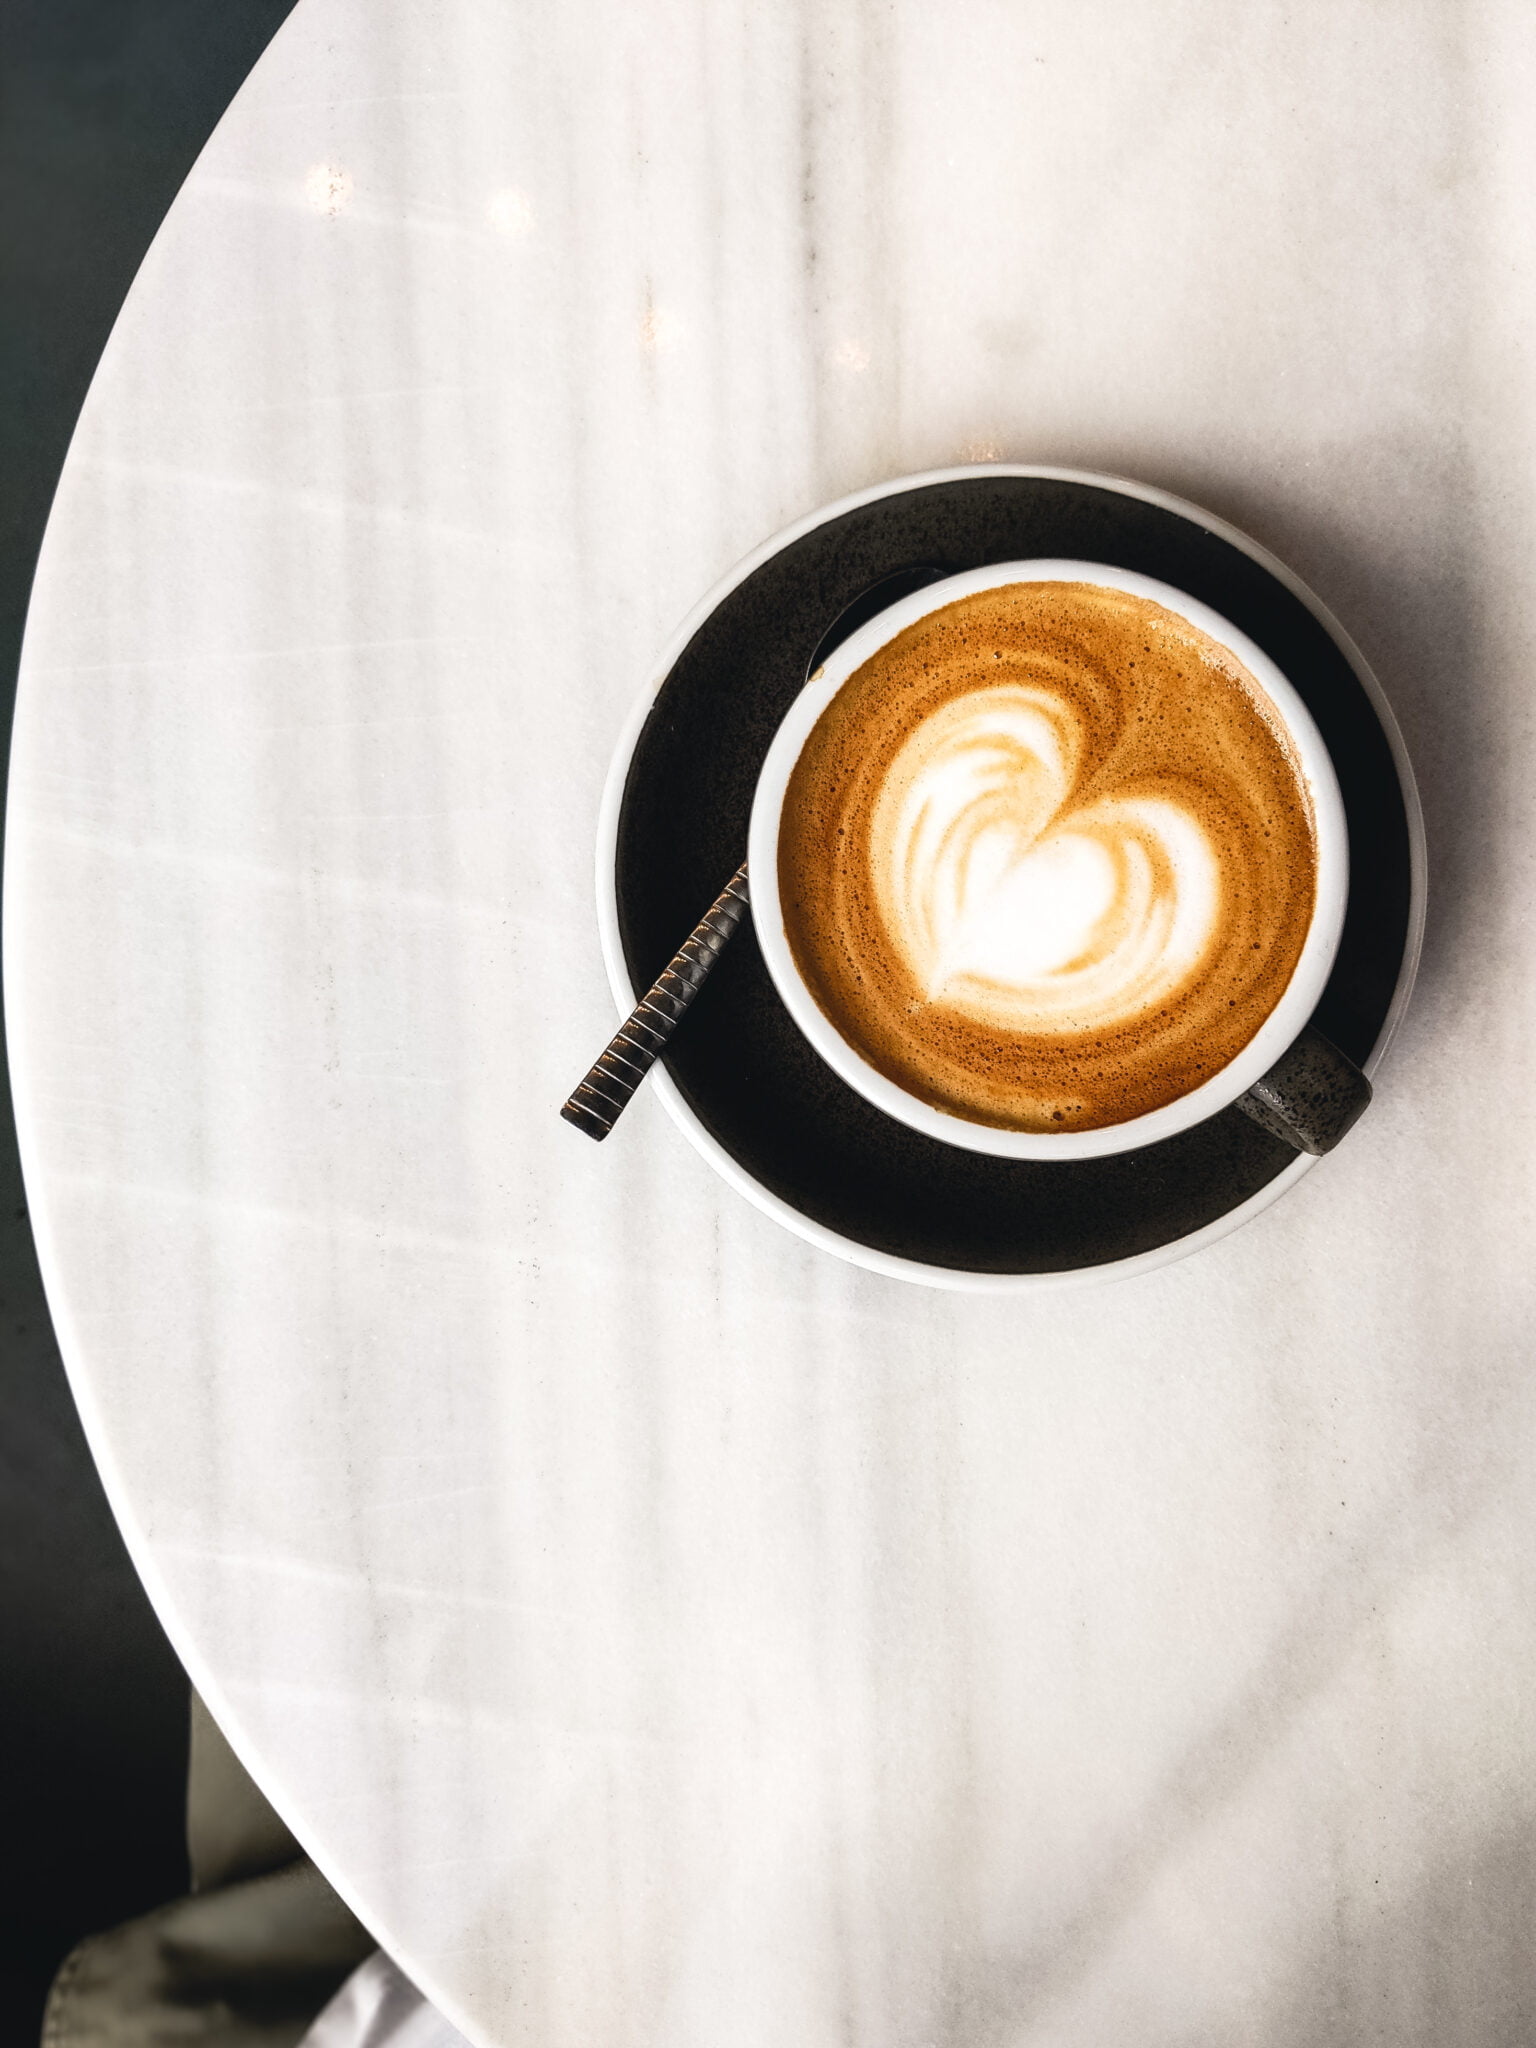 Flat White An Espresso Based Coffee Drink 4 1536x2048 